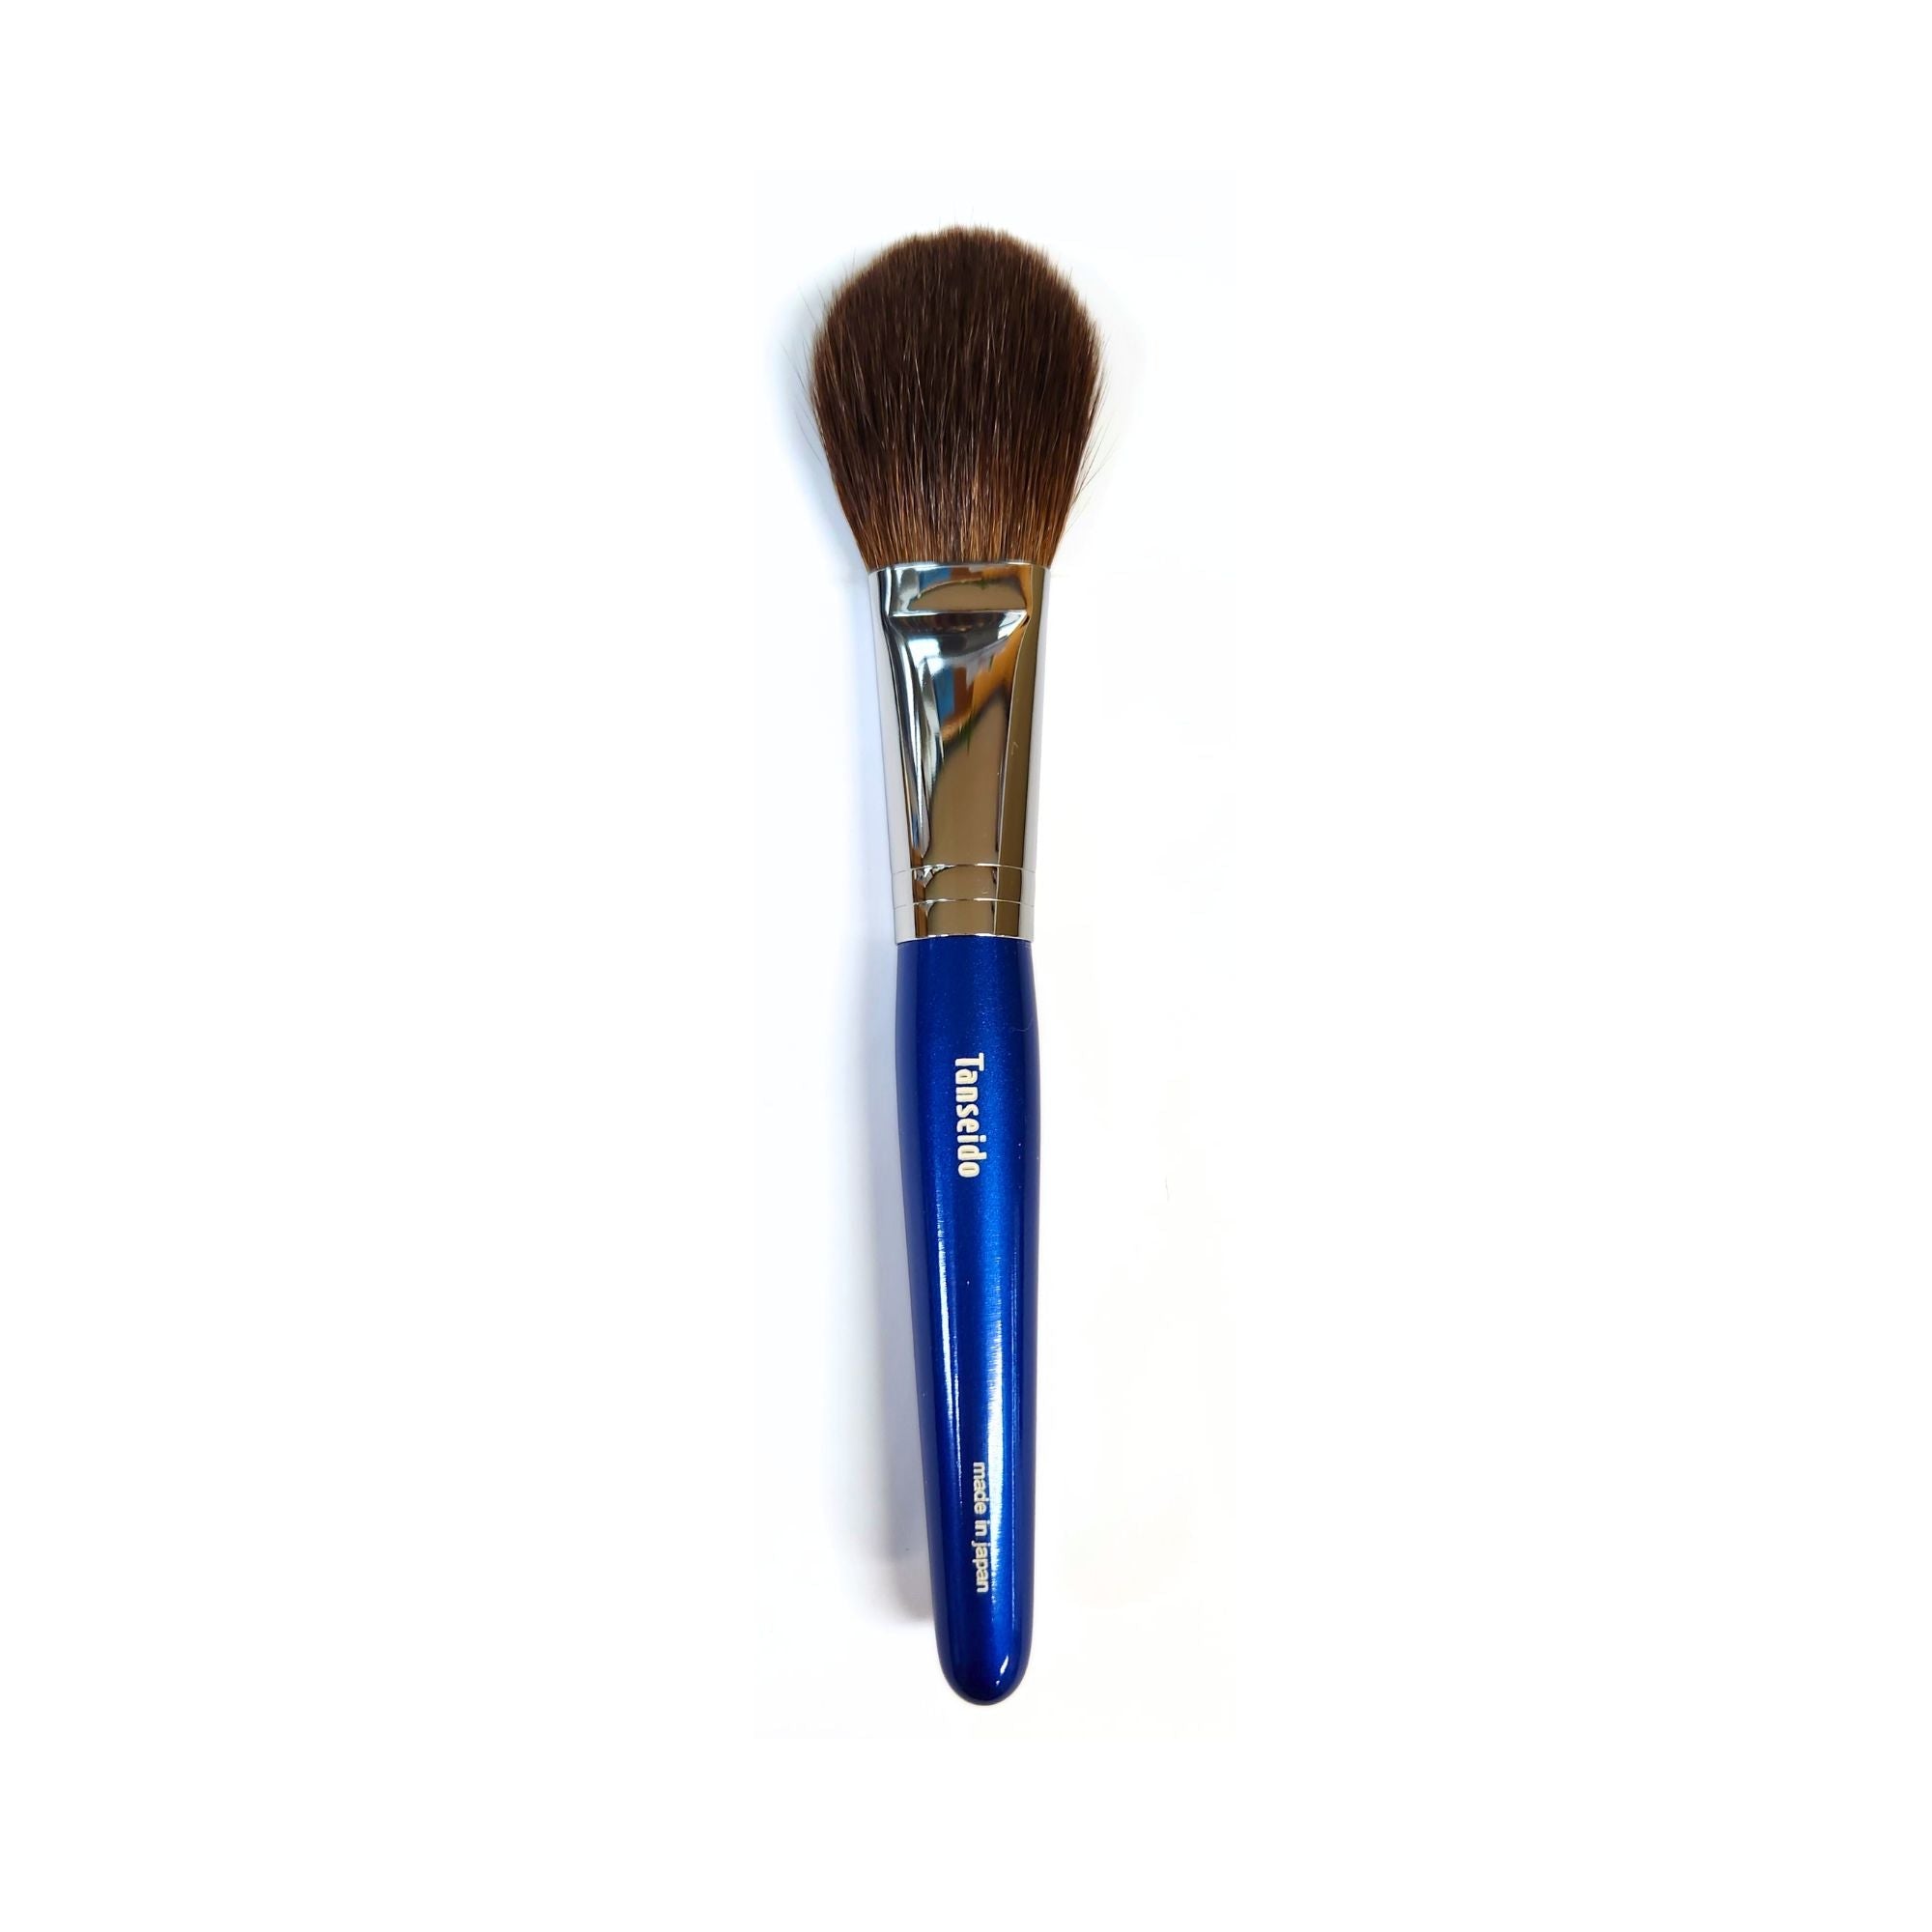 Tanseido KAQ20 Powder/Cheek Brush - Fude Beauty, Japanese Makeup Brushes